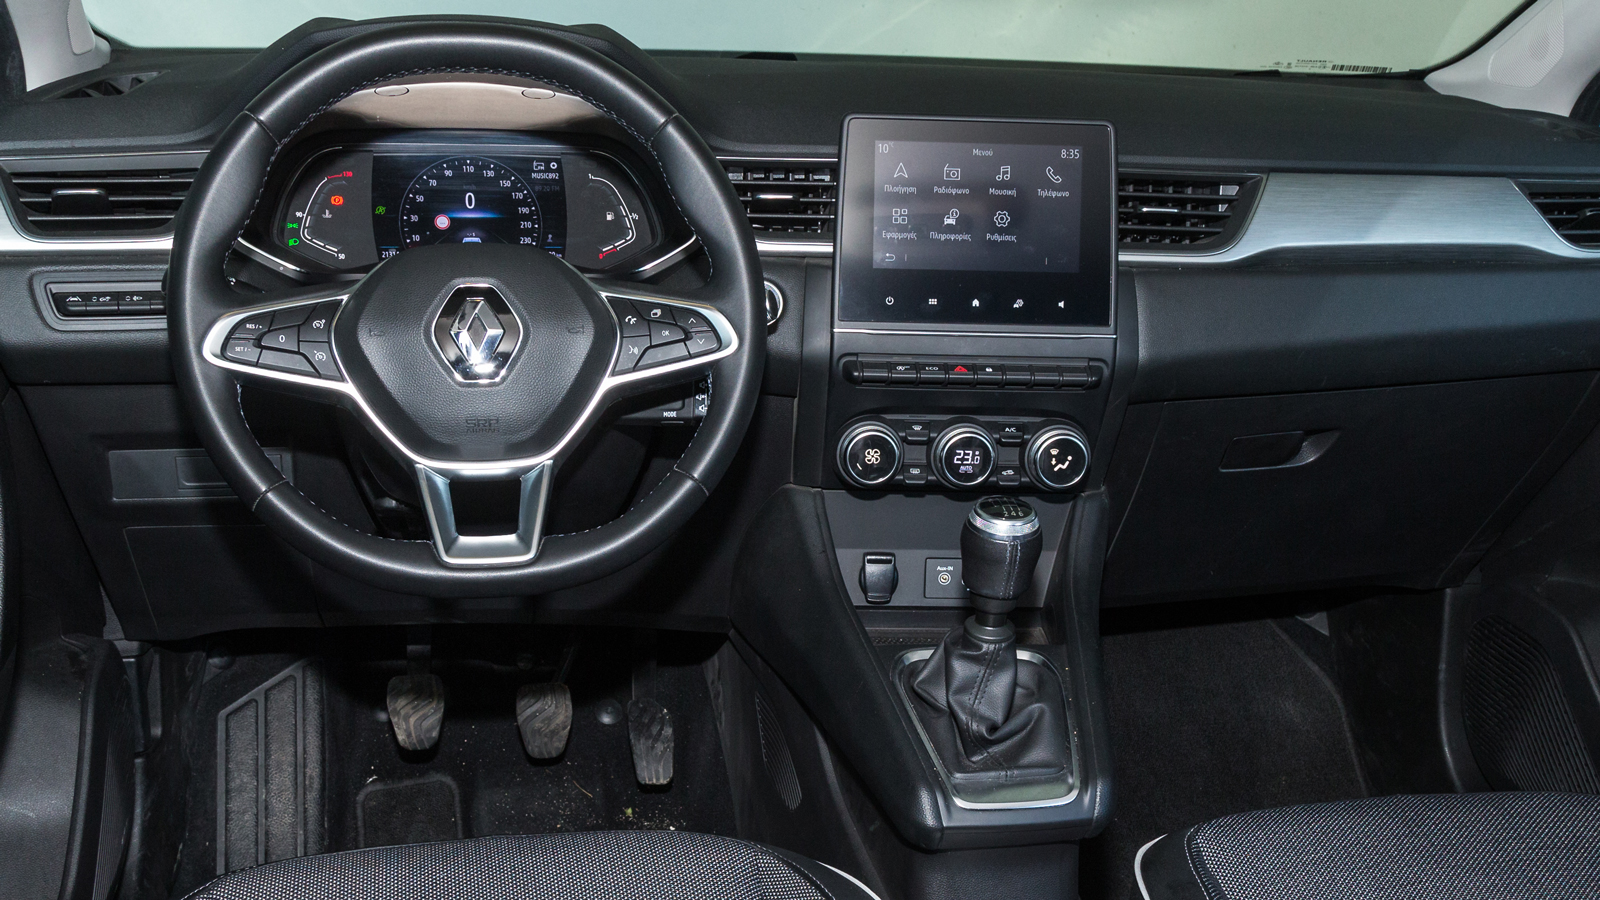 Citroen C3 Aircross 110ps VS Renault Captur 91ps. Ποιο ξεχωρίζει σε εξοπλισμό ασφαλείας και άνεσης;